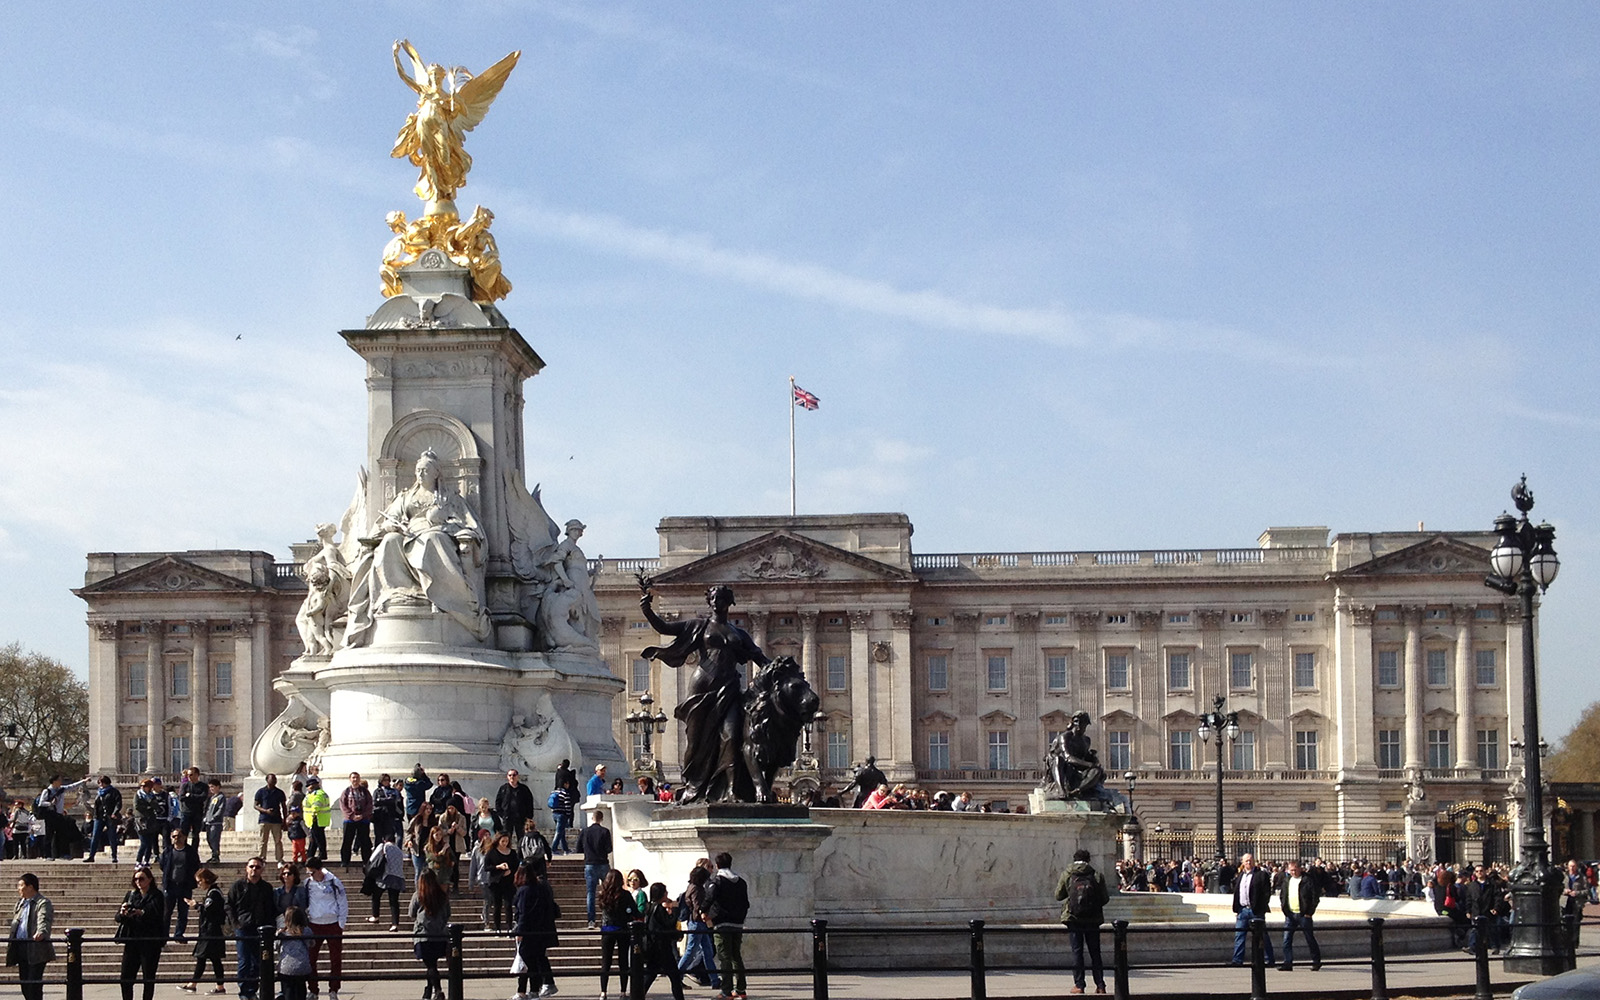 Buckingham Palace, April 2015